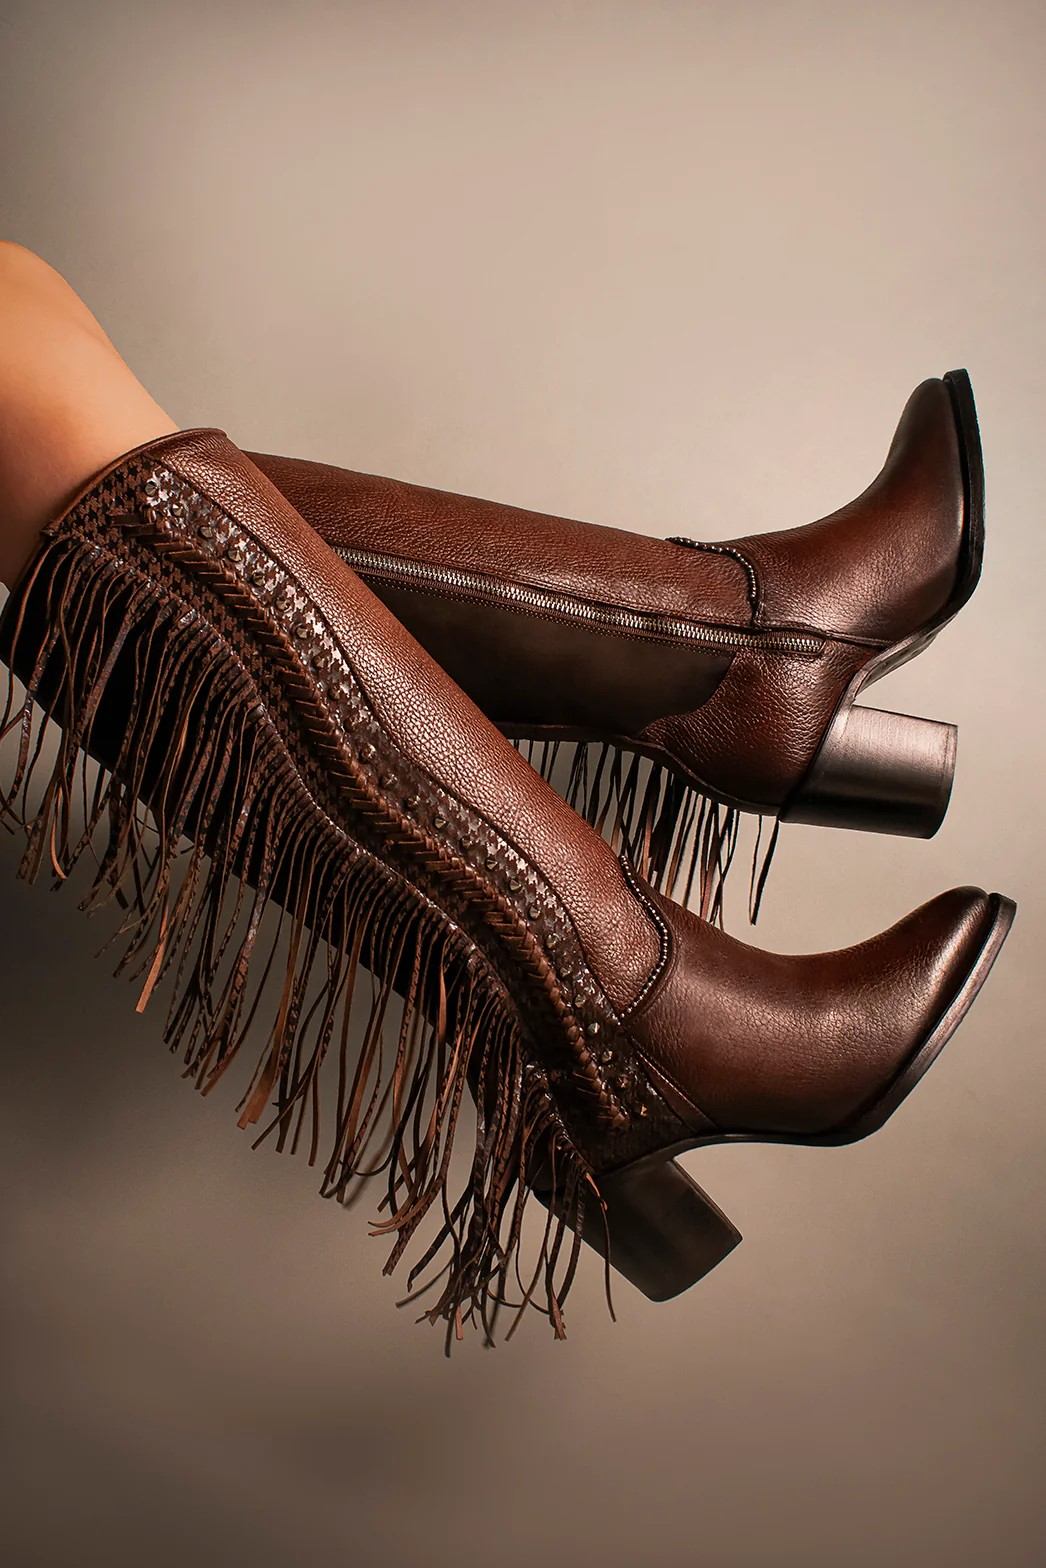 Cuadra Boots for women ladies - Cowboy, casual, fashion & dress boots